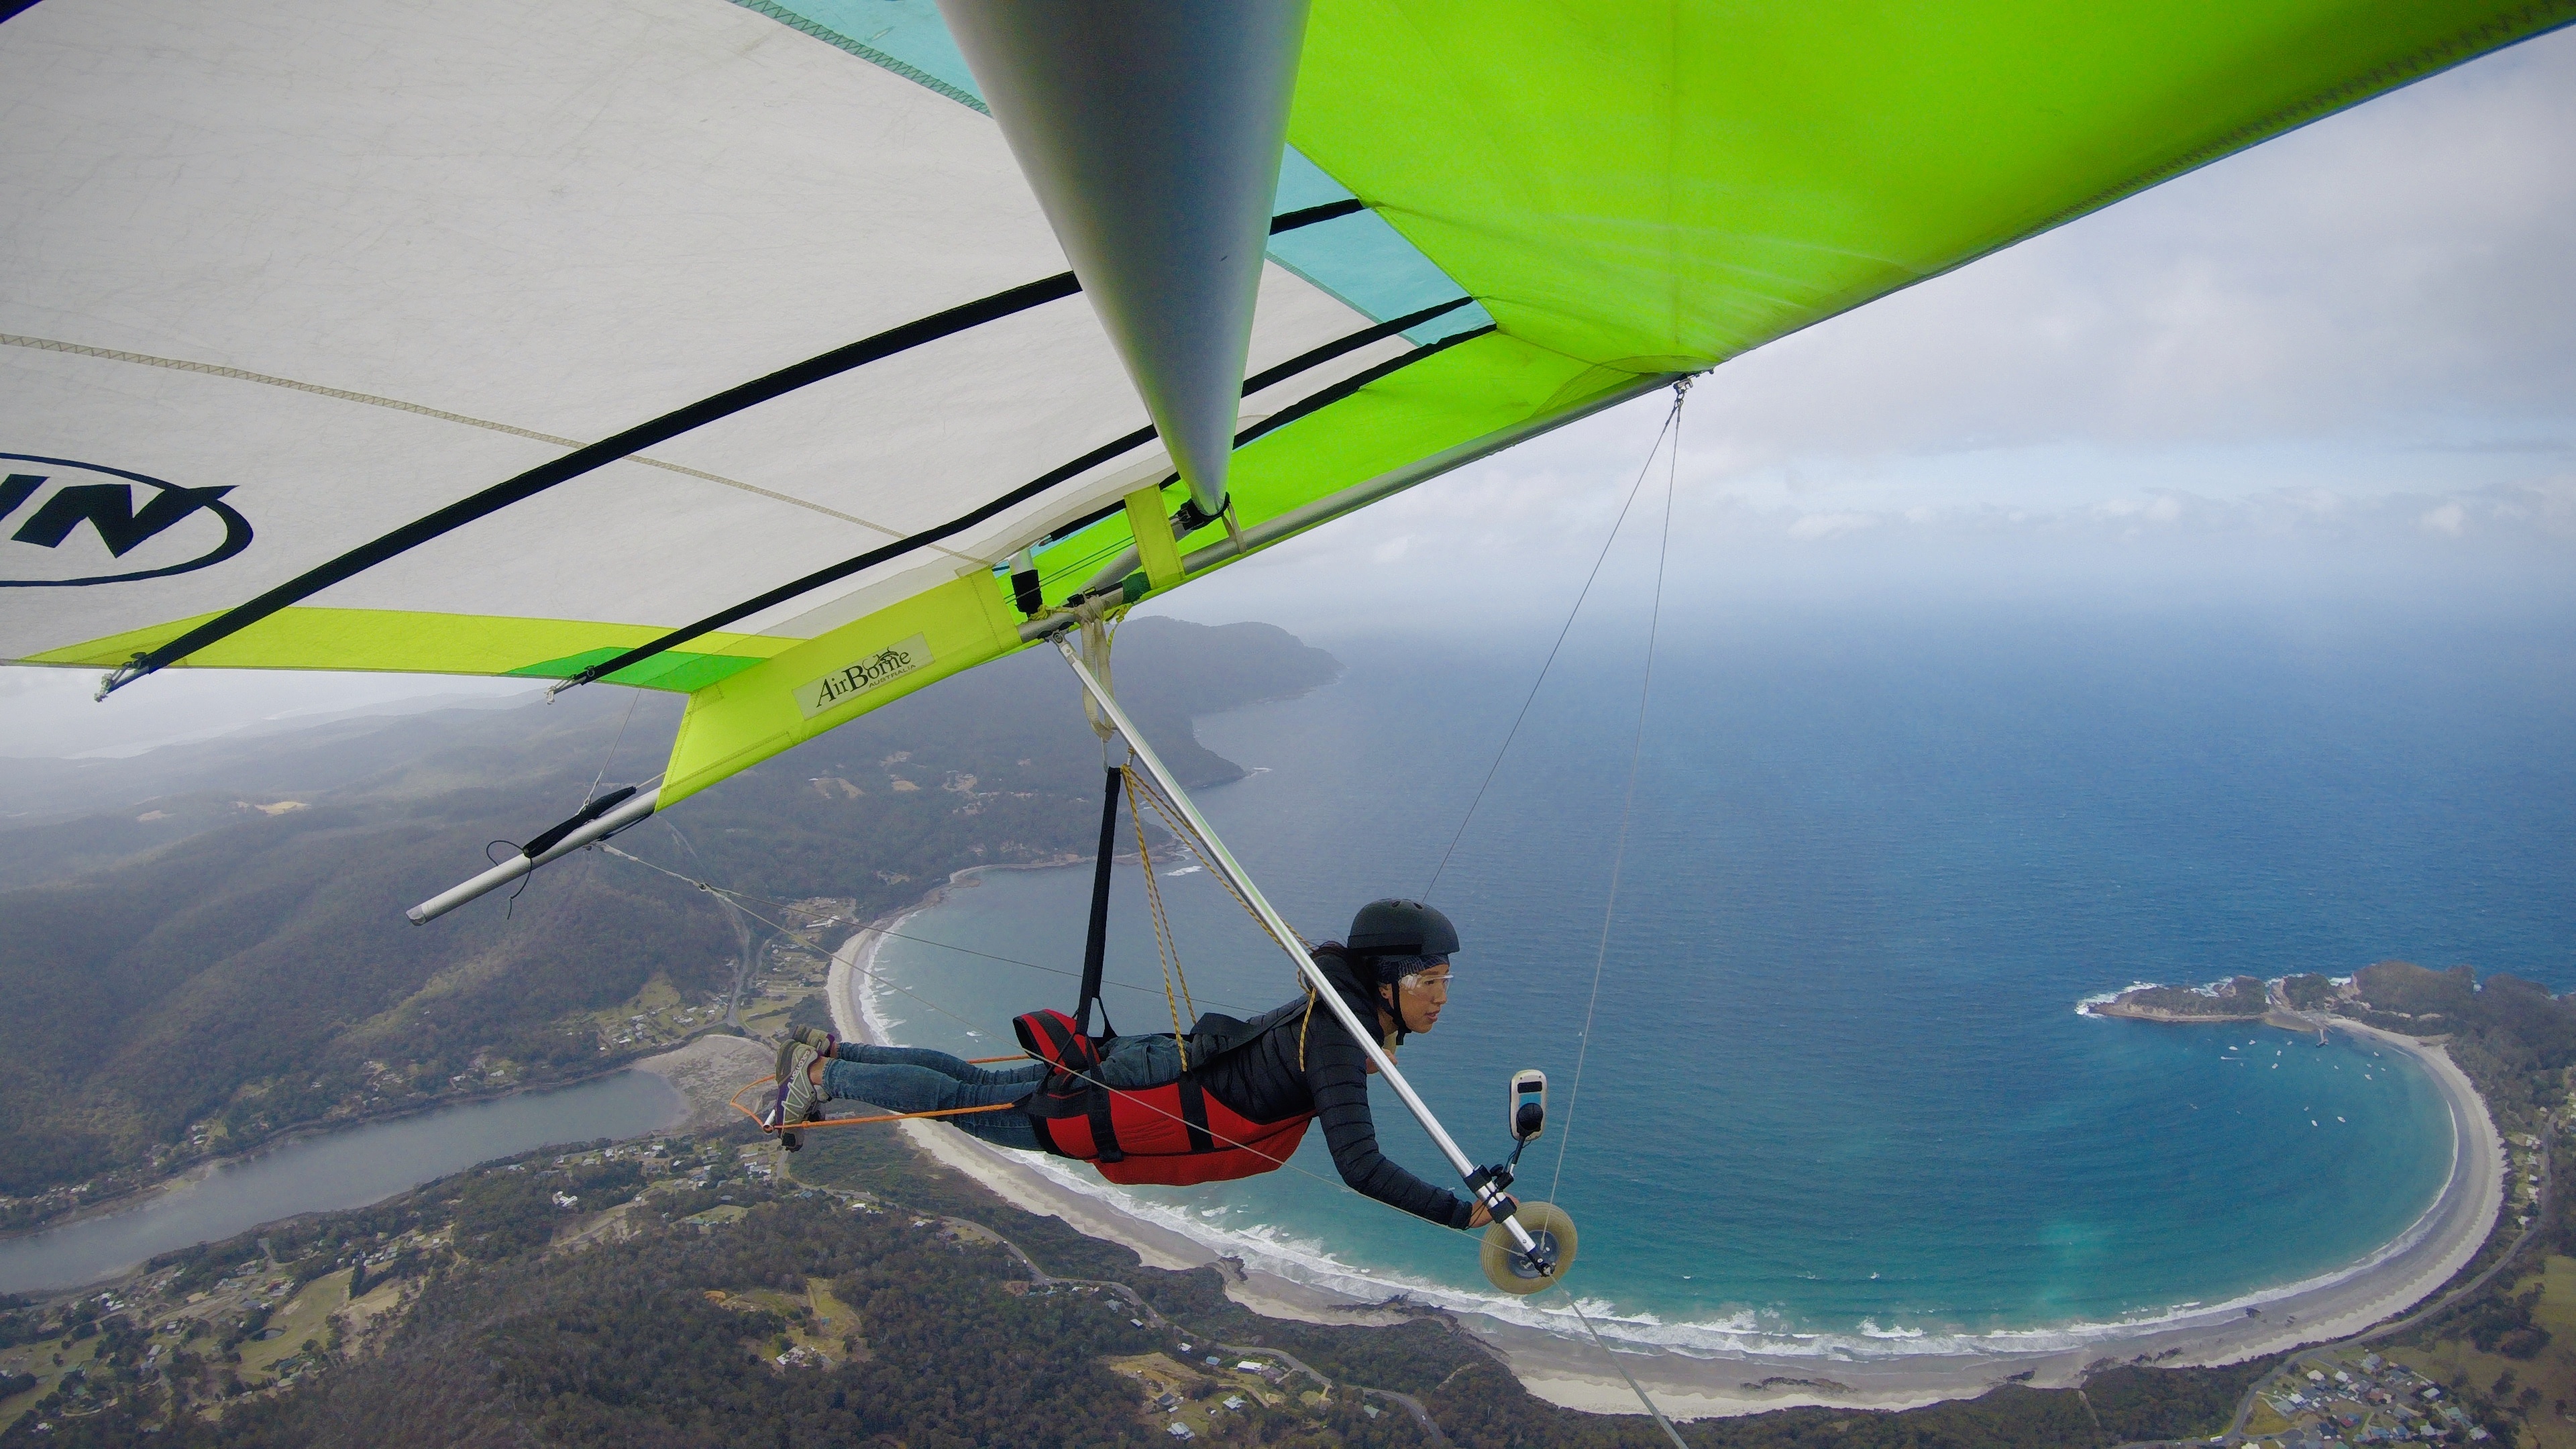 Gliding: THPA - Tasmanian Hang gliding Paragliding Association, Island state of Australia. 3840x2160 4K Wallpaper.